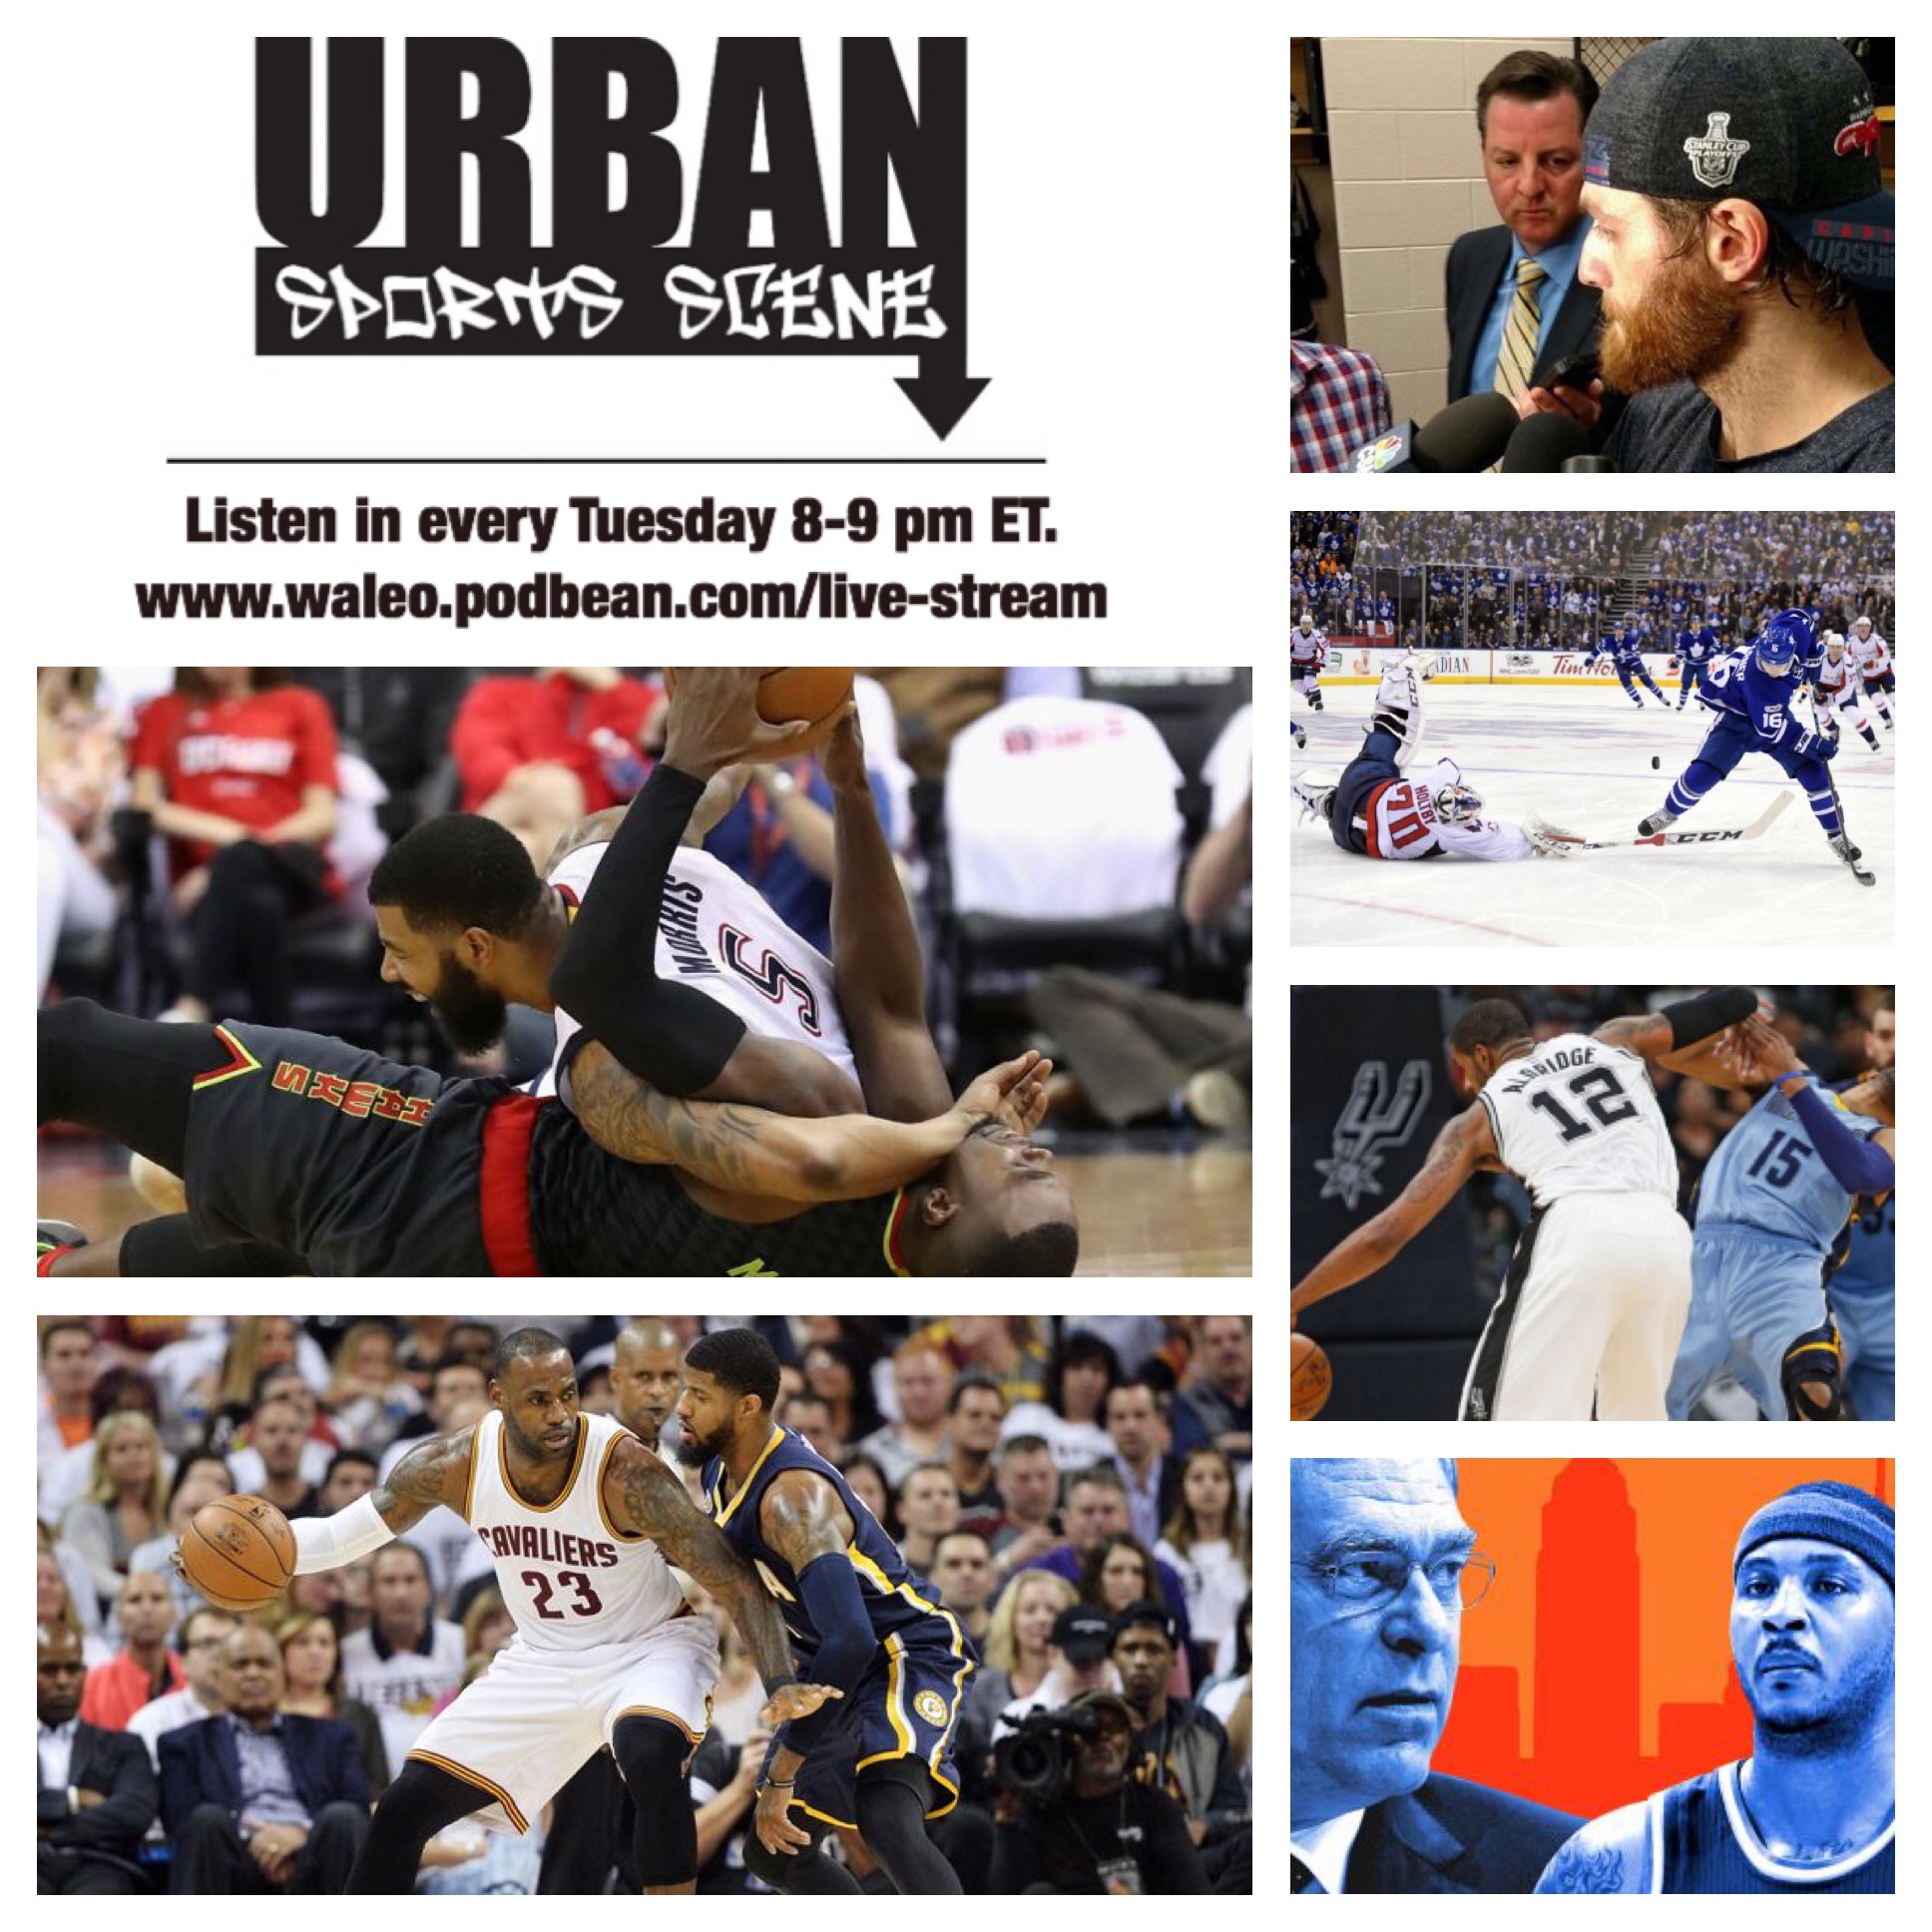 Urban Sports Scene Episode 287